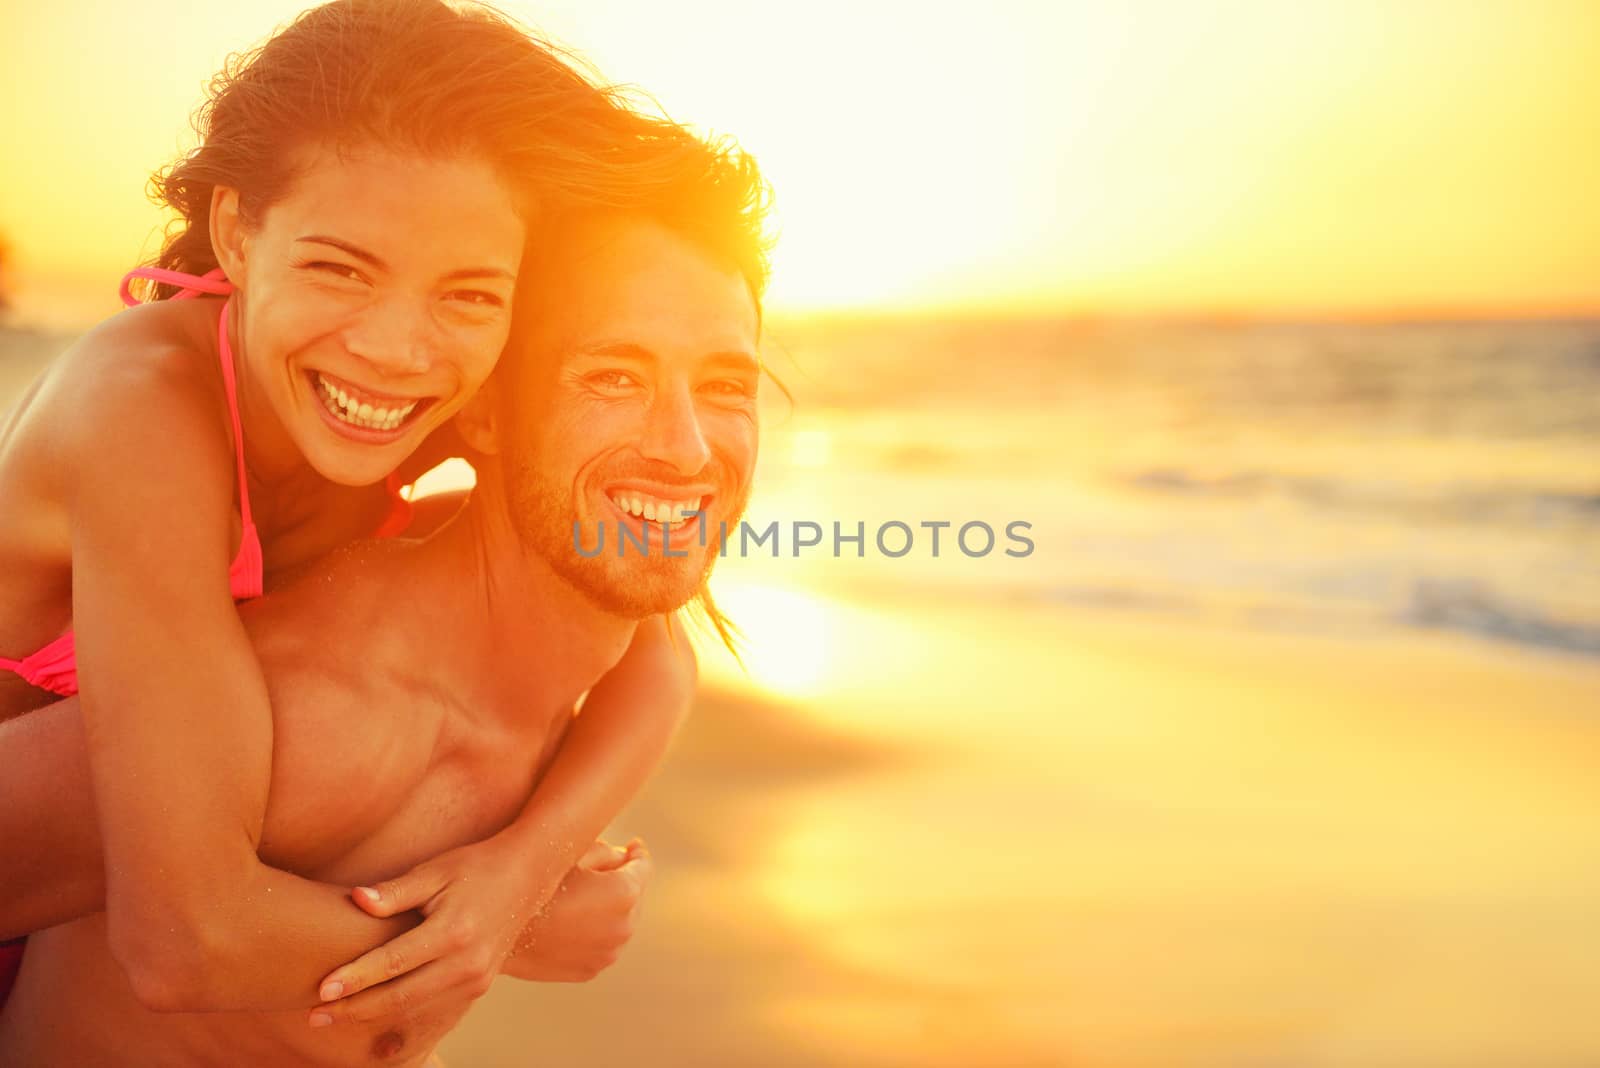 Lovers couple in love having fun on beach portrait by Maridav